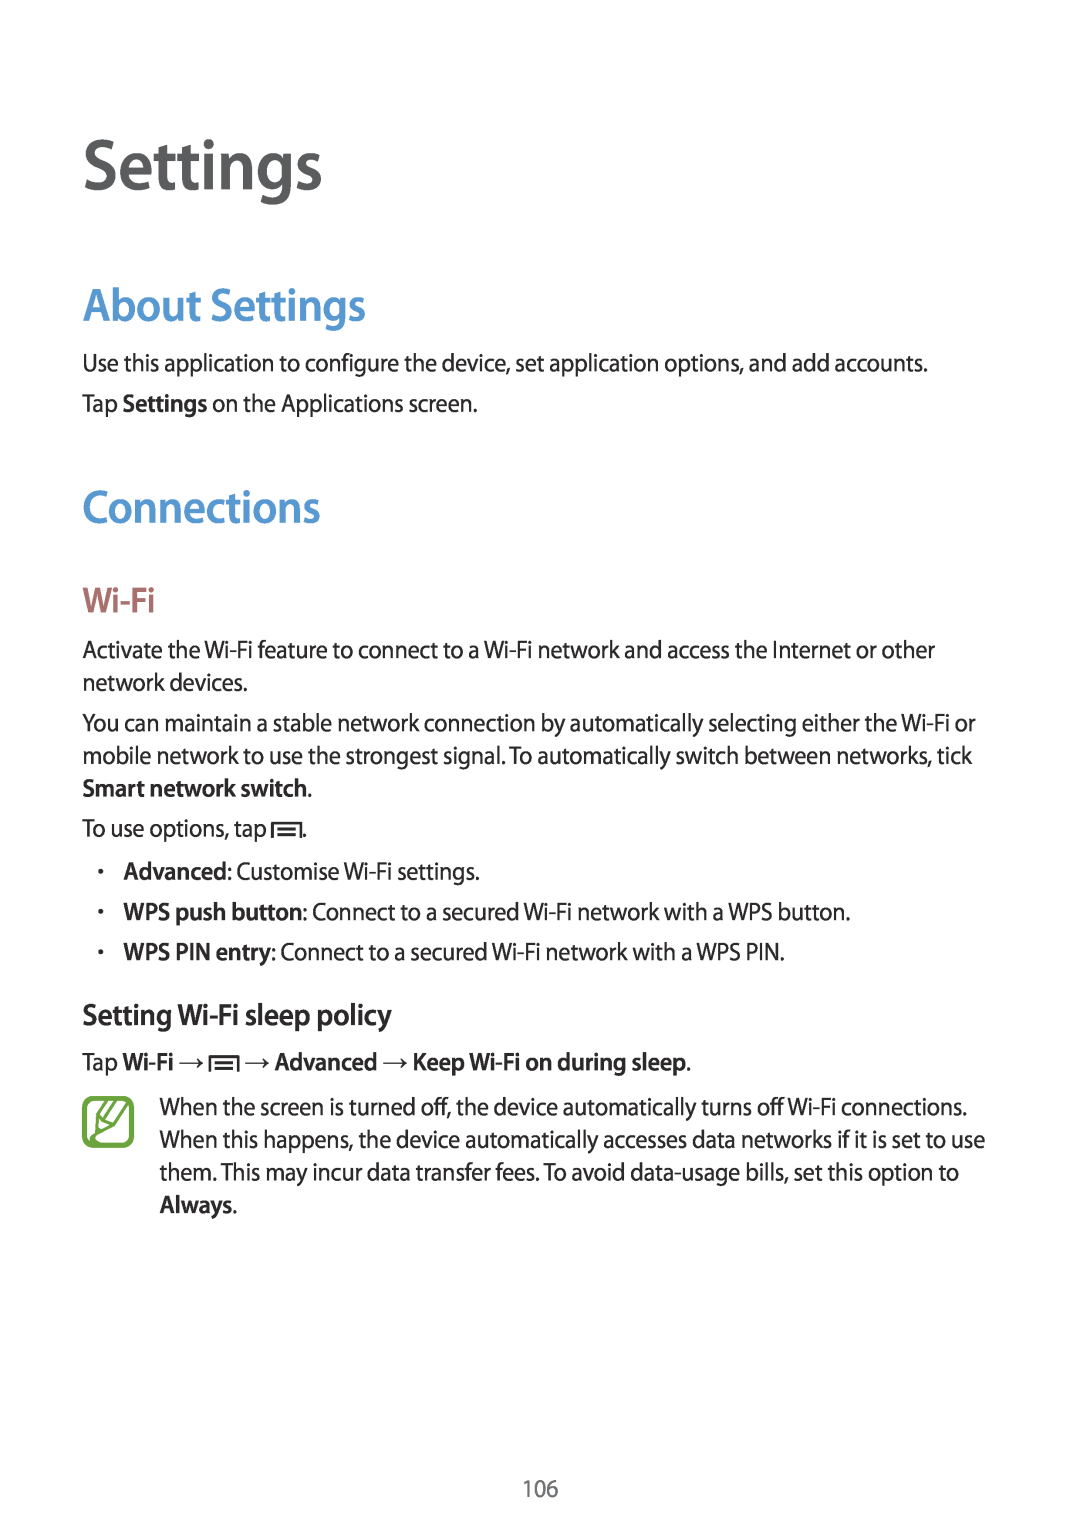 Samsung GT-I9305OKDKPN, GT-I9305OKDTMN, GT-I9305RWDCOS manual About Settings, Connections, Setting Wi-Fi sleep policy 